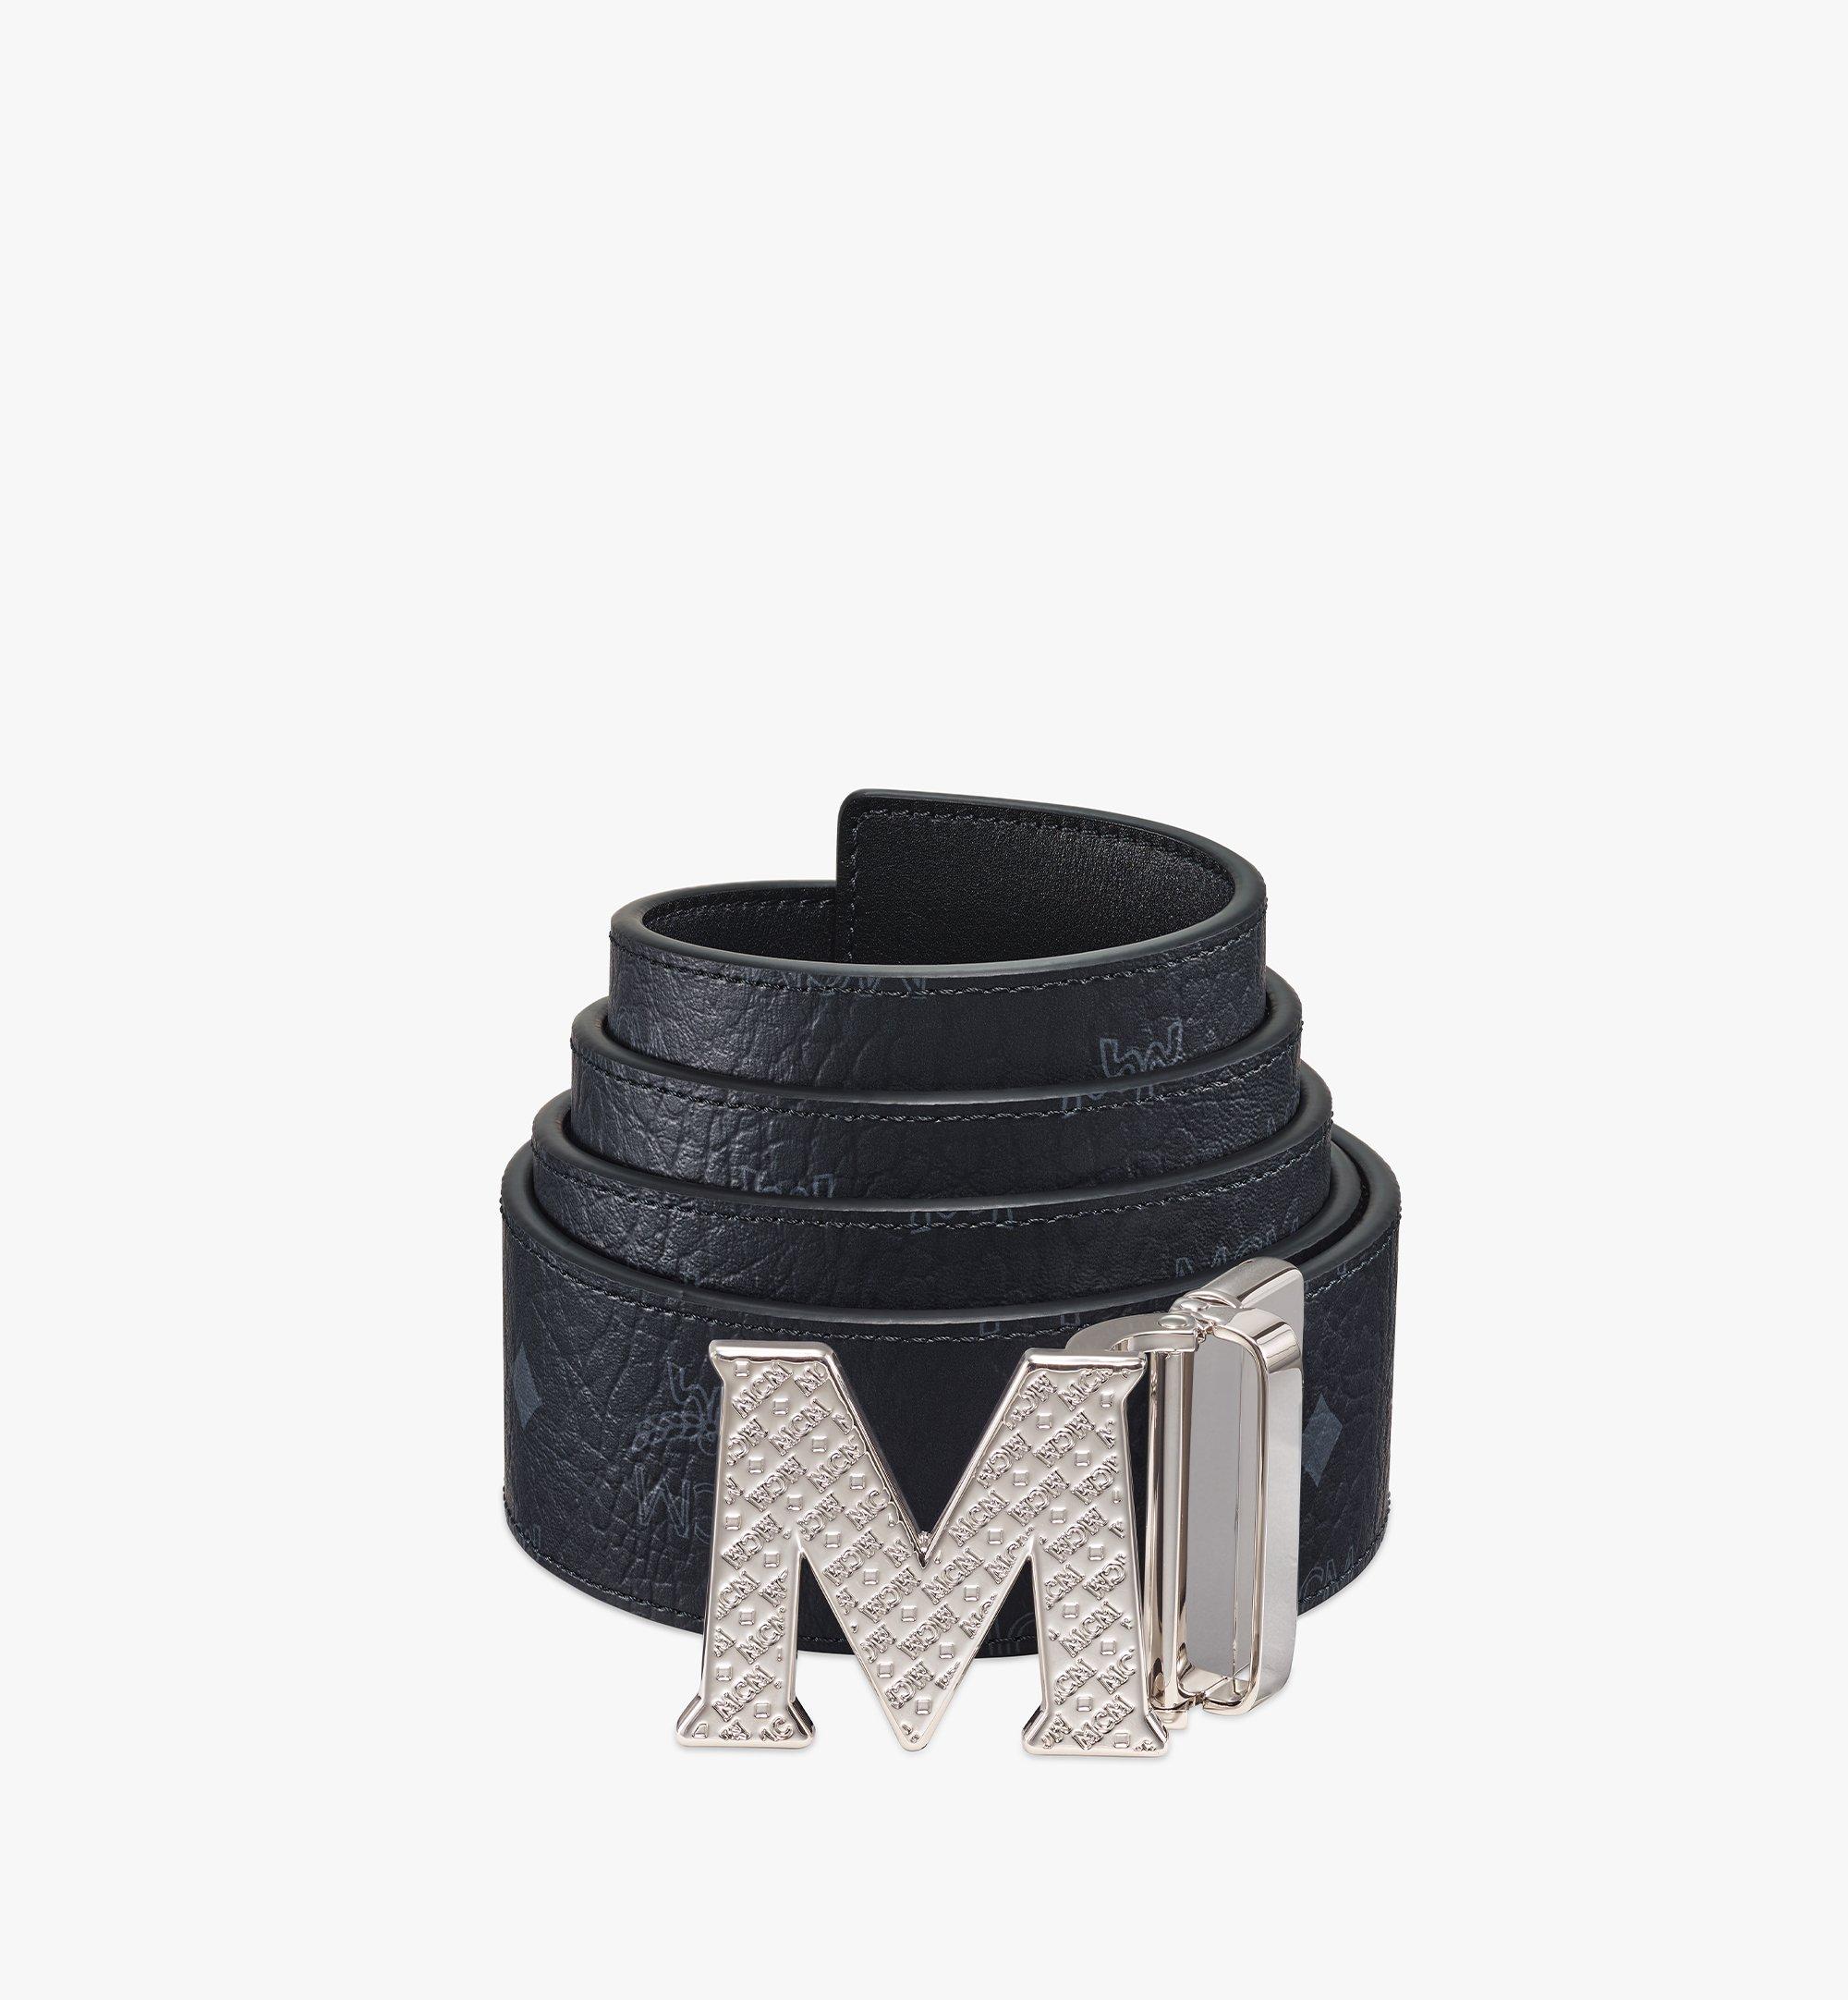 MCM Claus Textured M Reversible Belt 4.5 cm in Visetos Black MXBBSVI02BK001 Alternate View 1